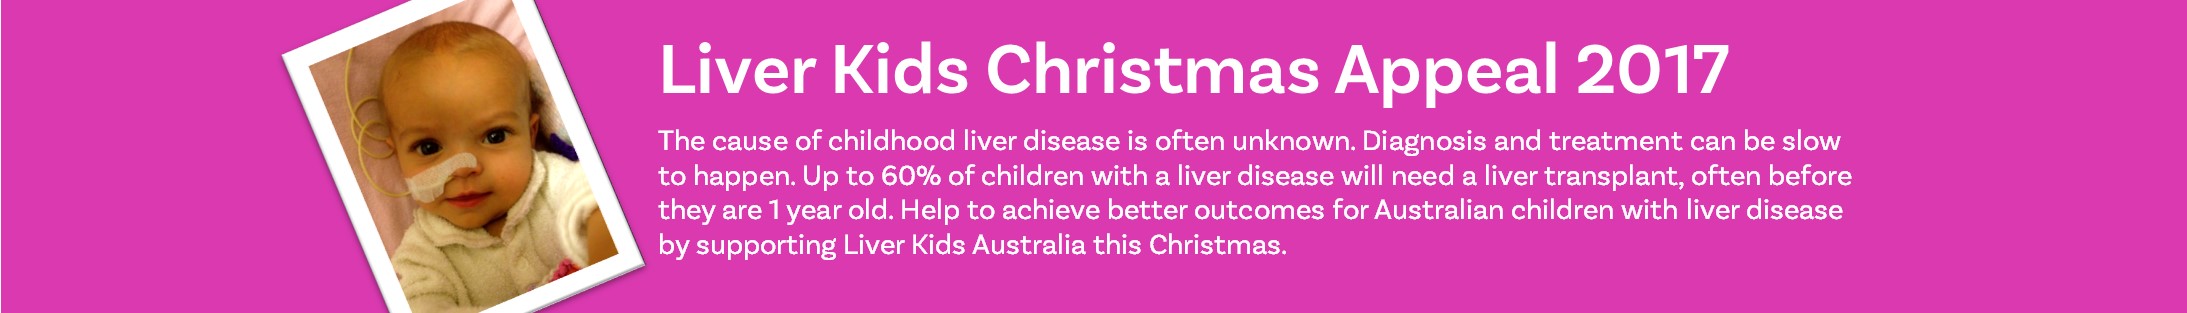 Liver Kids Christmas Appeal 2017